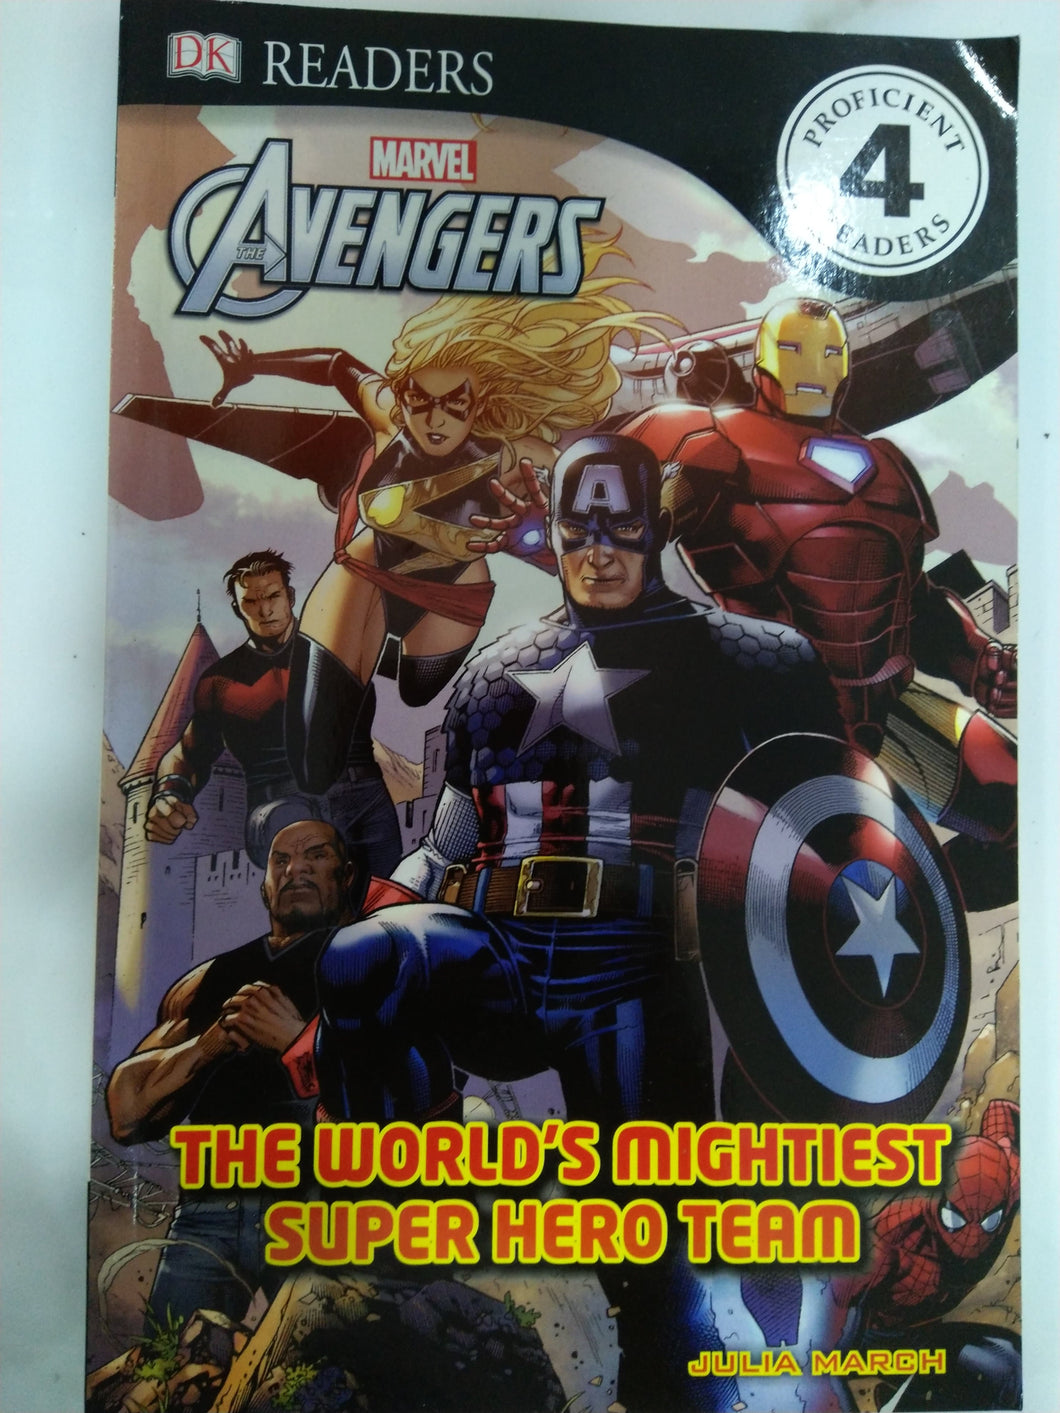 Marvel The Avengers - The World's Mightiest Super Hero Team (DK Readers Level 4)